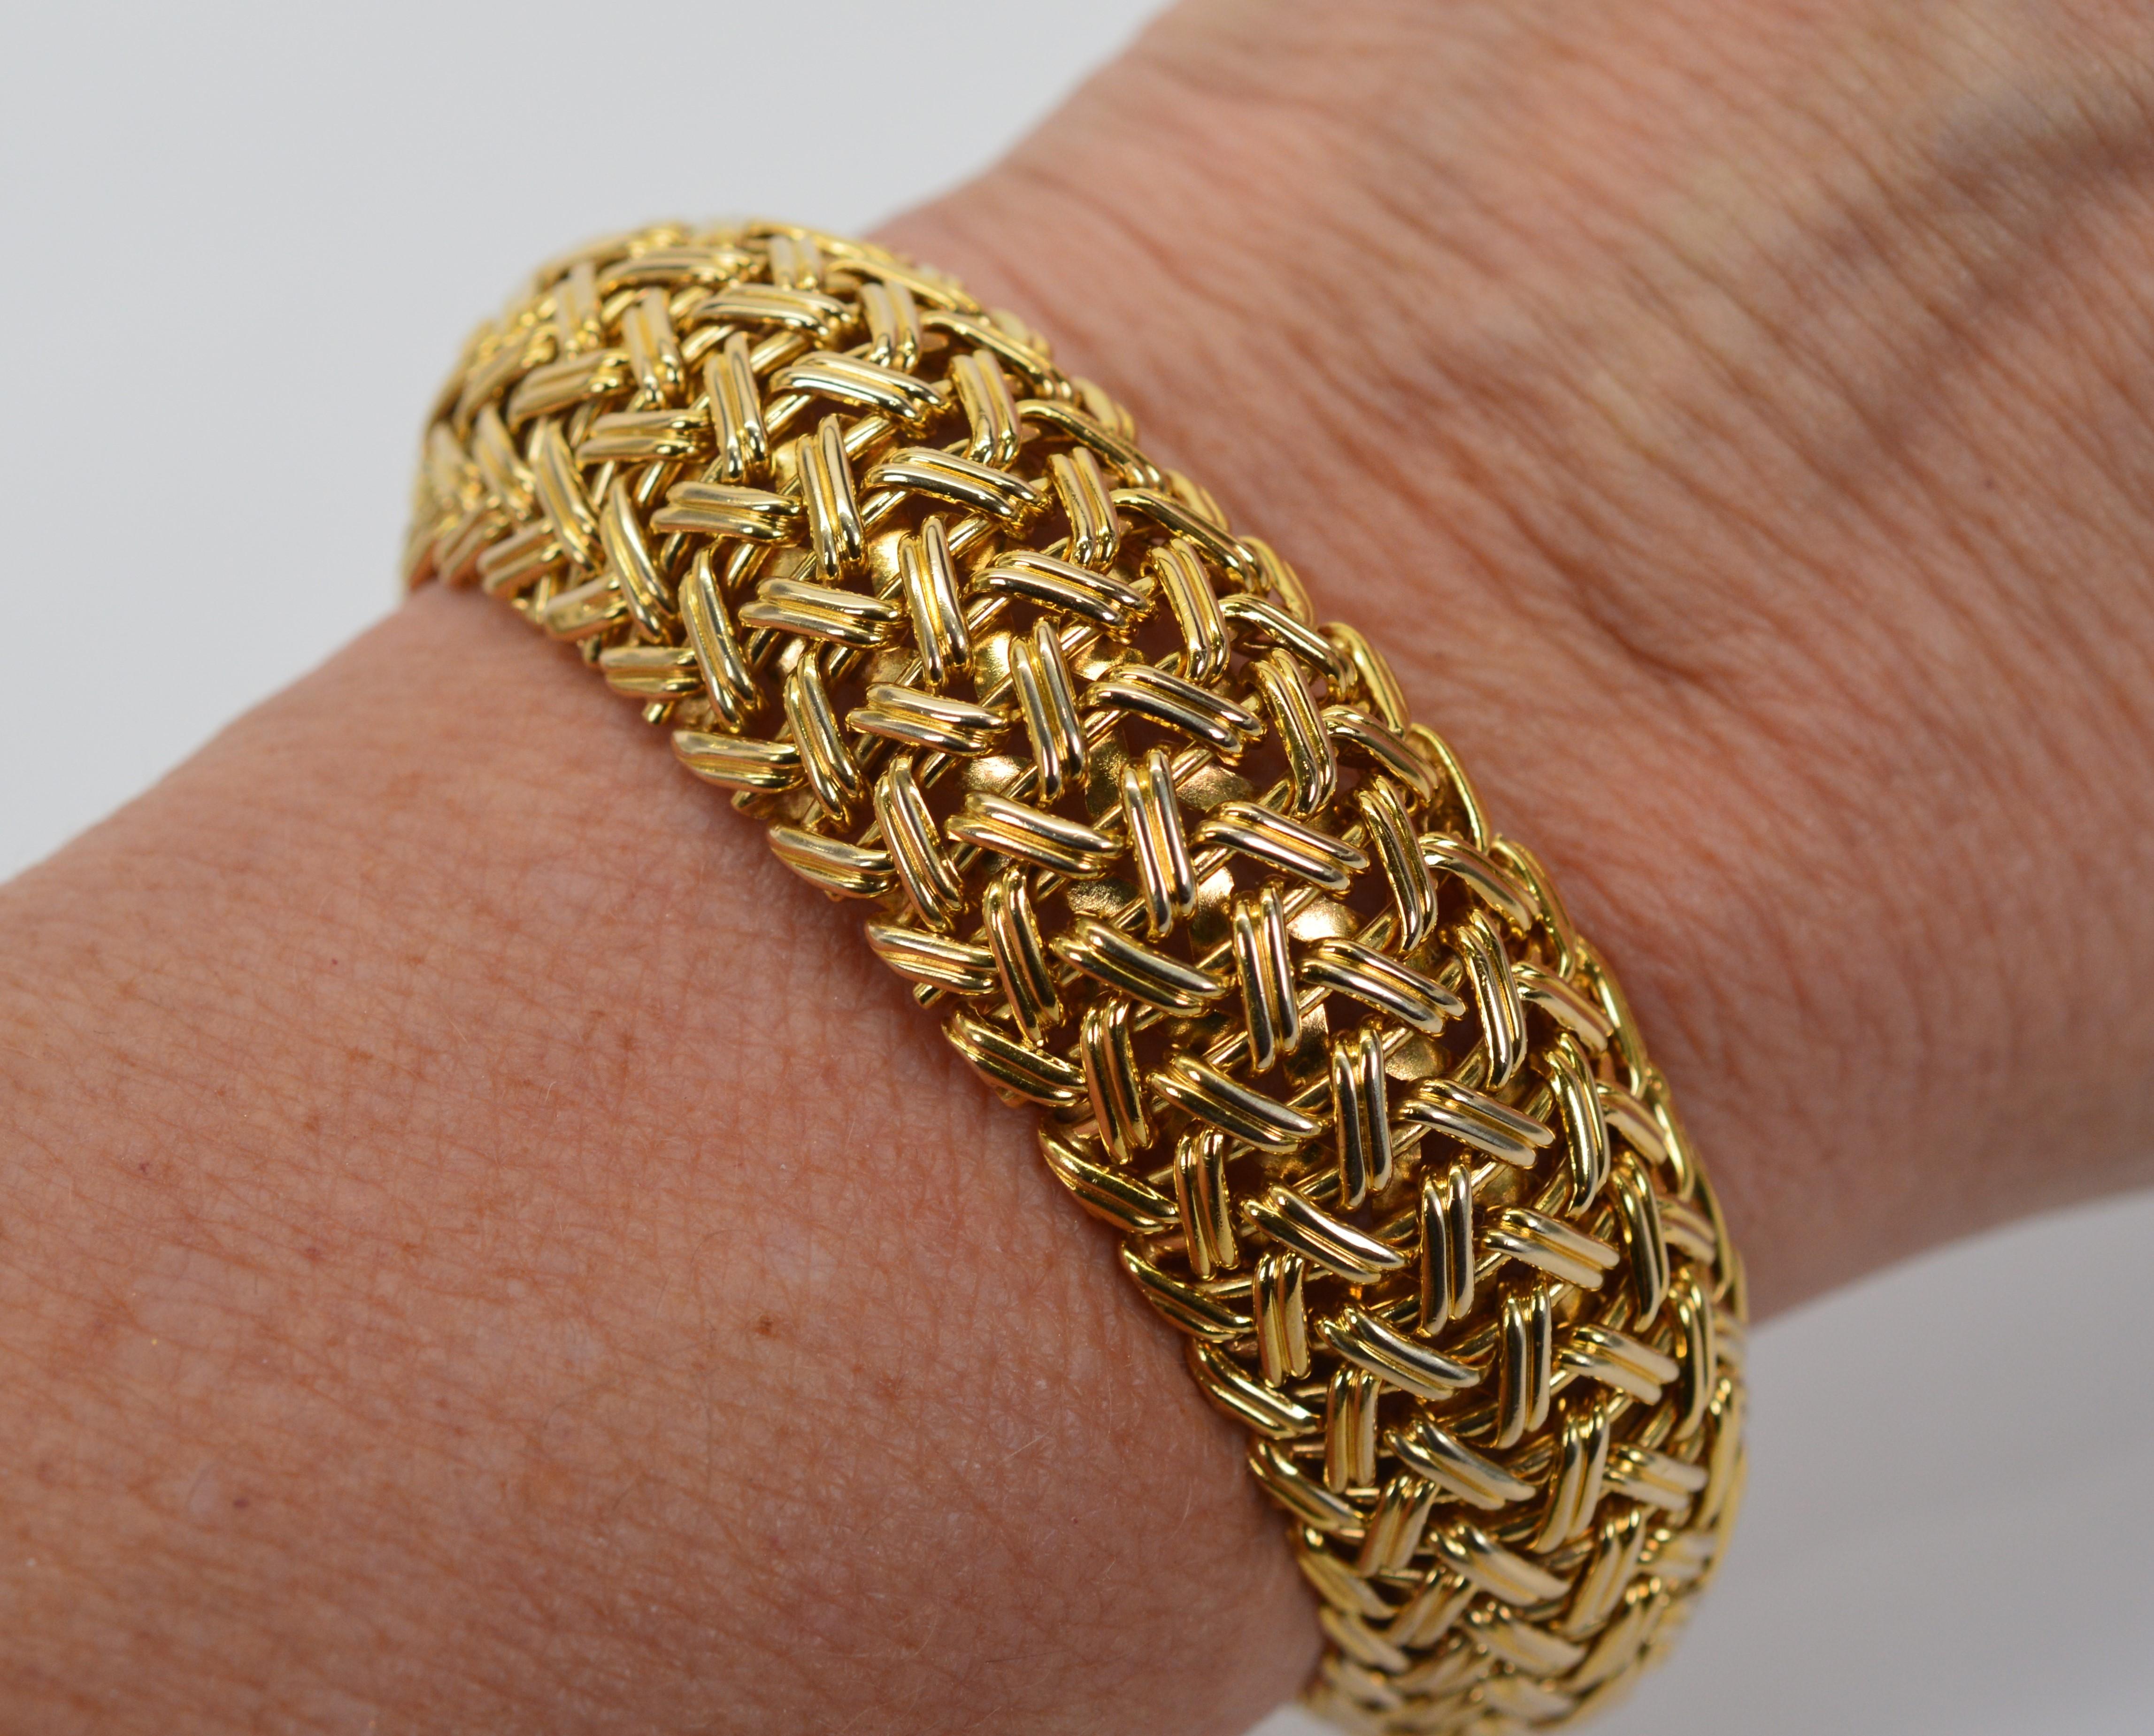 14 karat gold bracelet